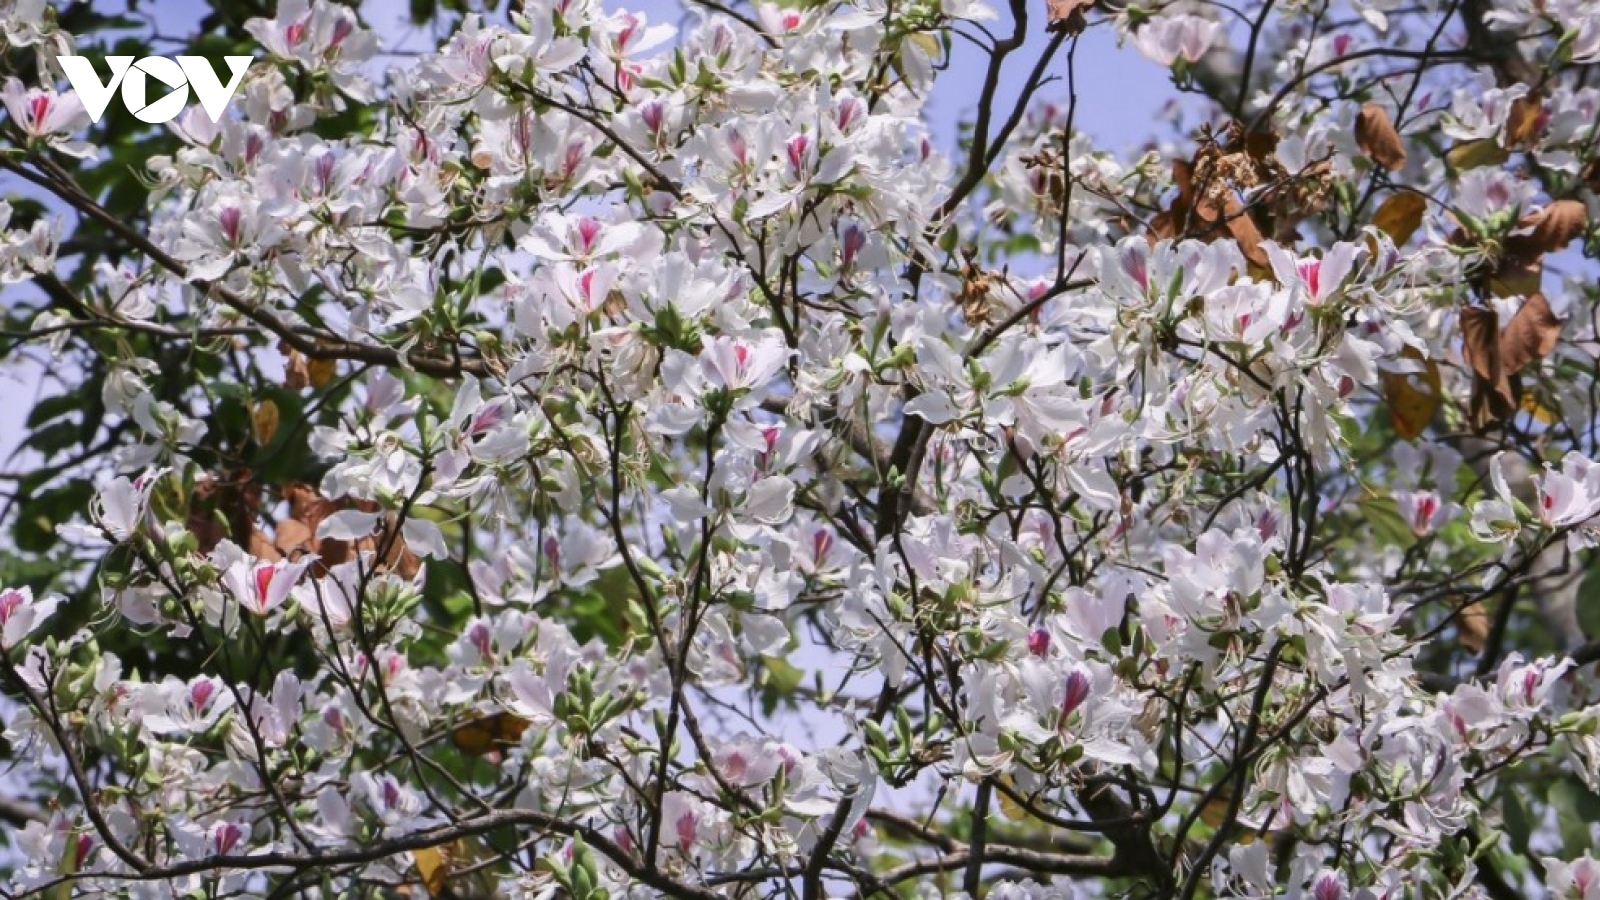 Stunning ban flowers appear in full bloom in Dien Bien